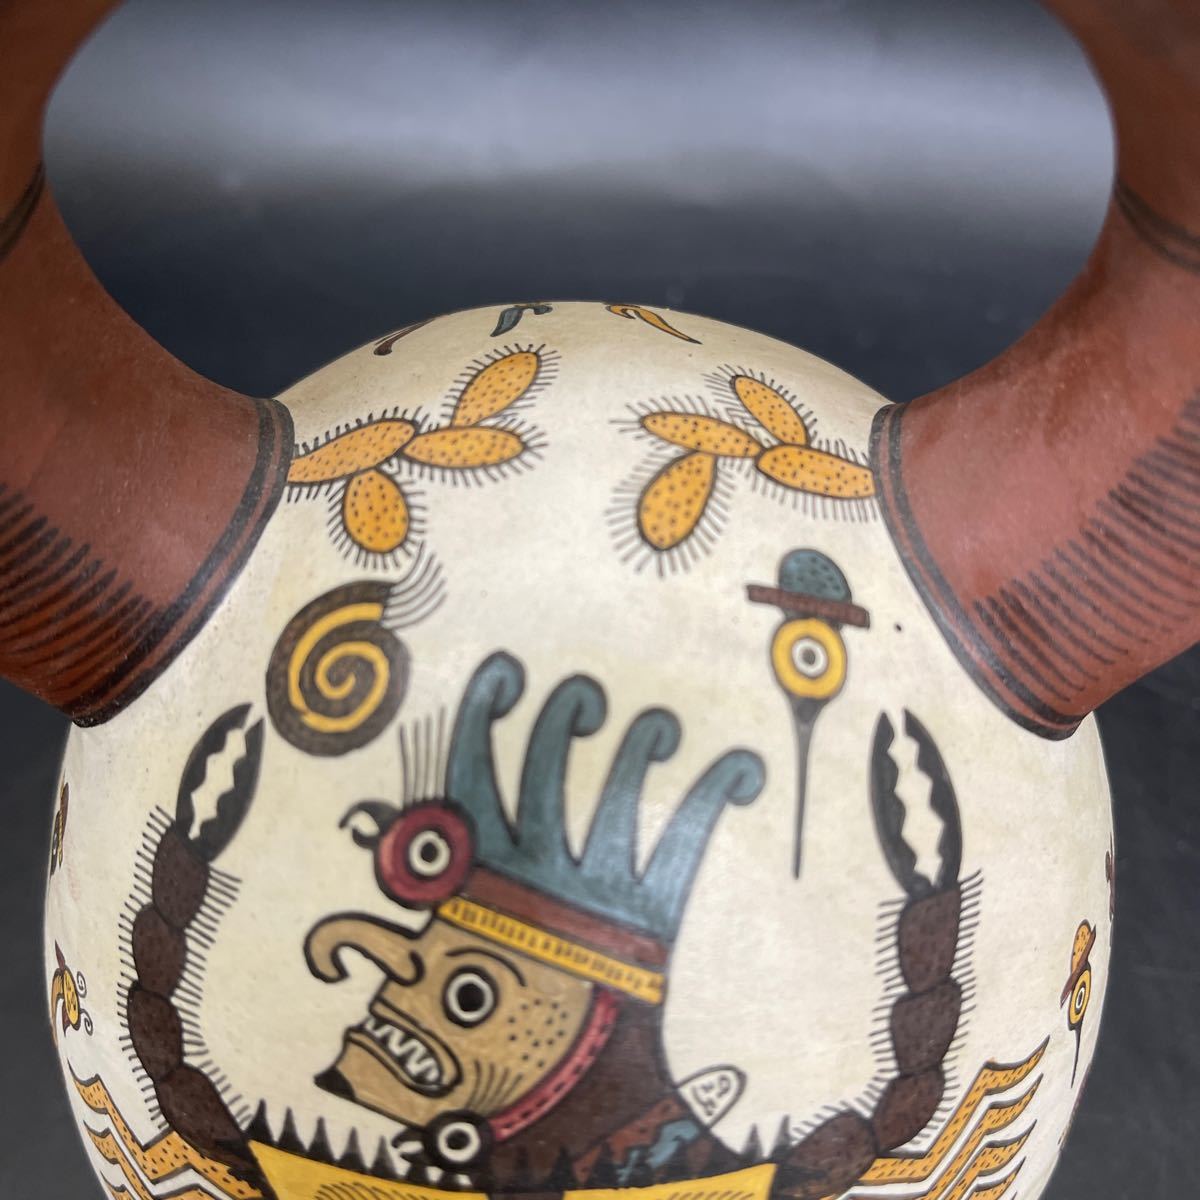 B12211706 ペルー モチェ文化土器 鐙型注口土器 インテリア チャビン文化様式から続く鐙形注口を持つ細くすっきりした印象の平底球形の土器_画像3